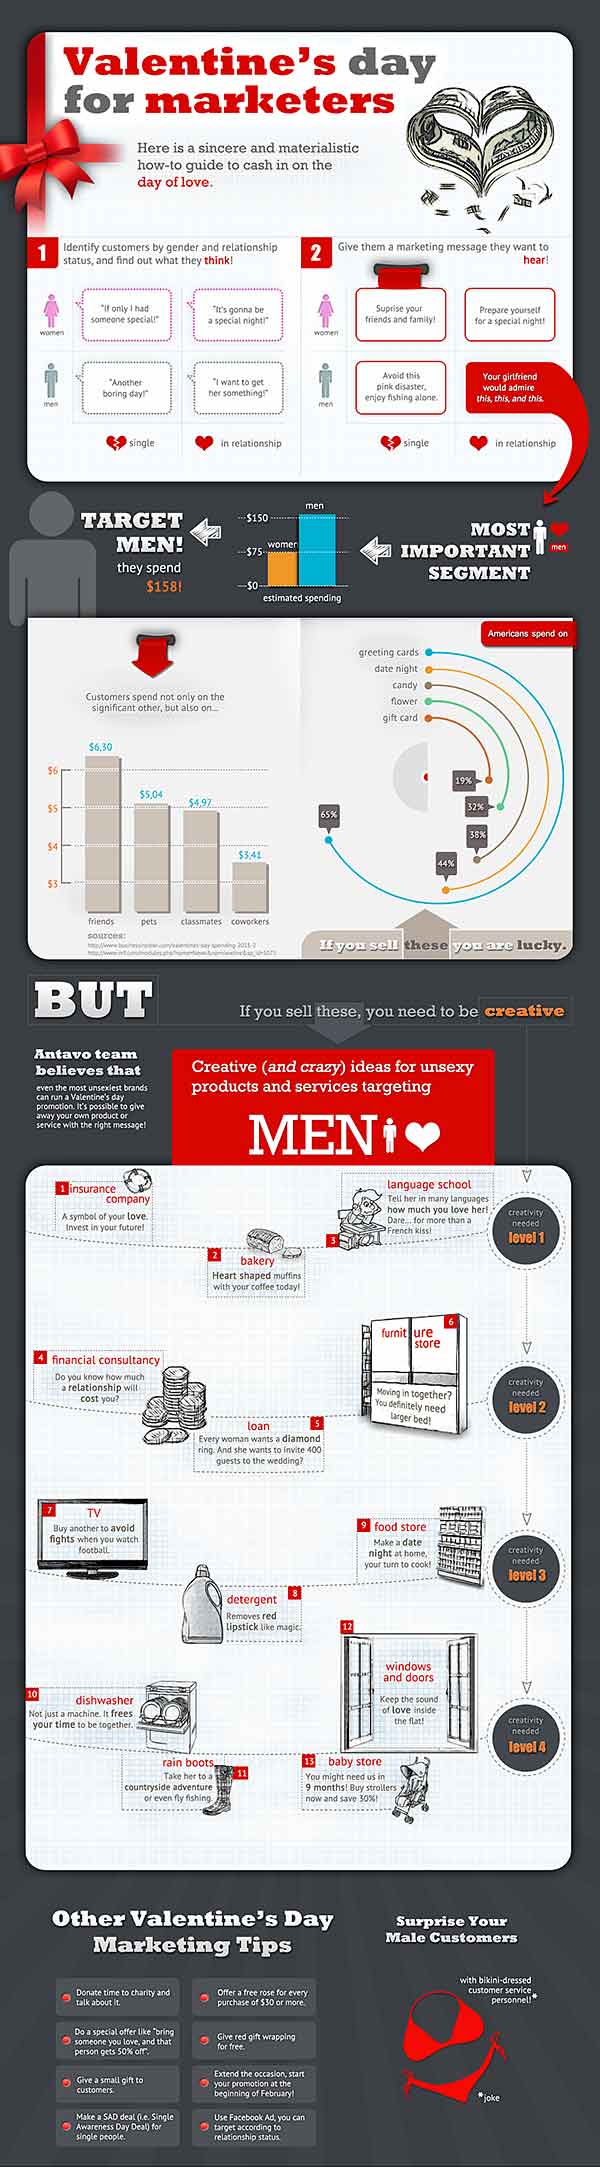 Valetines_Day_Marketing_Infographic-imarketor